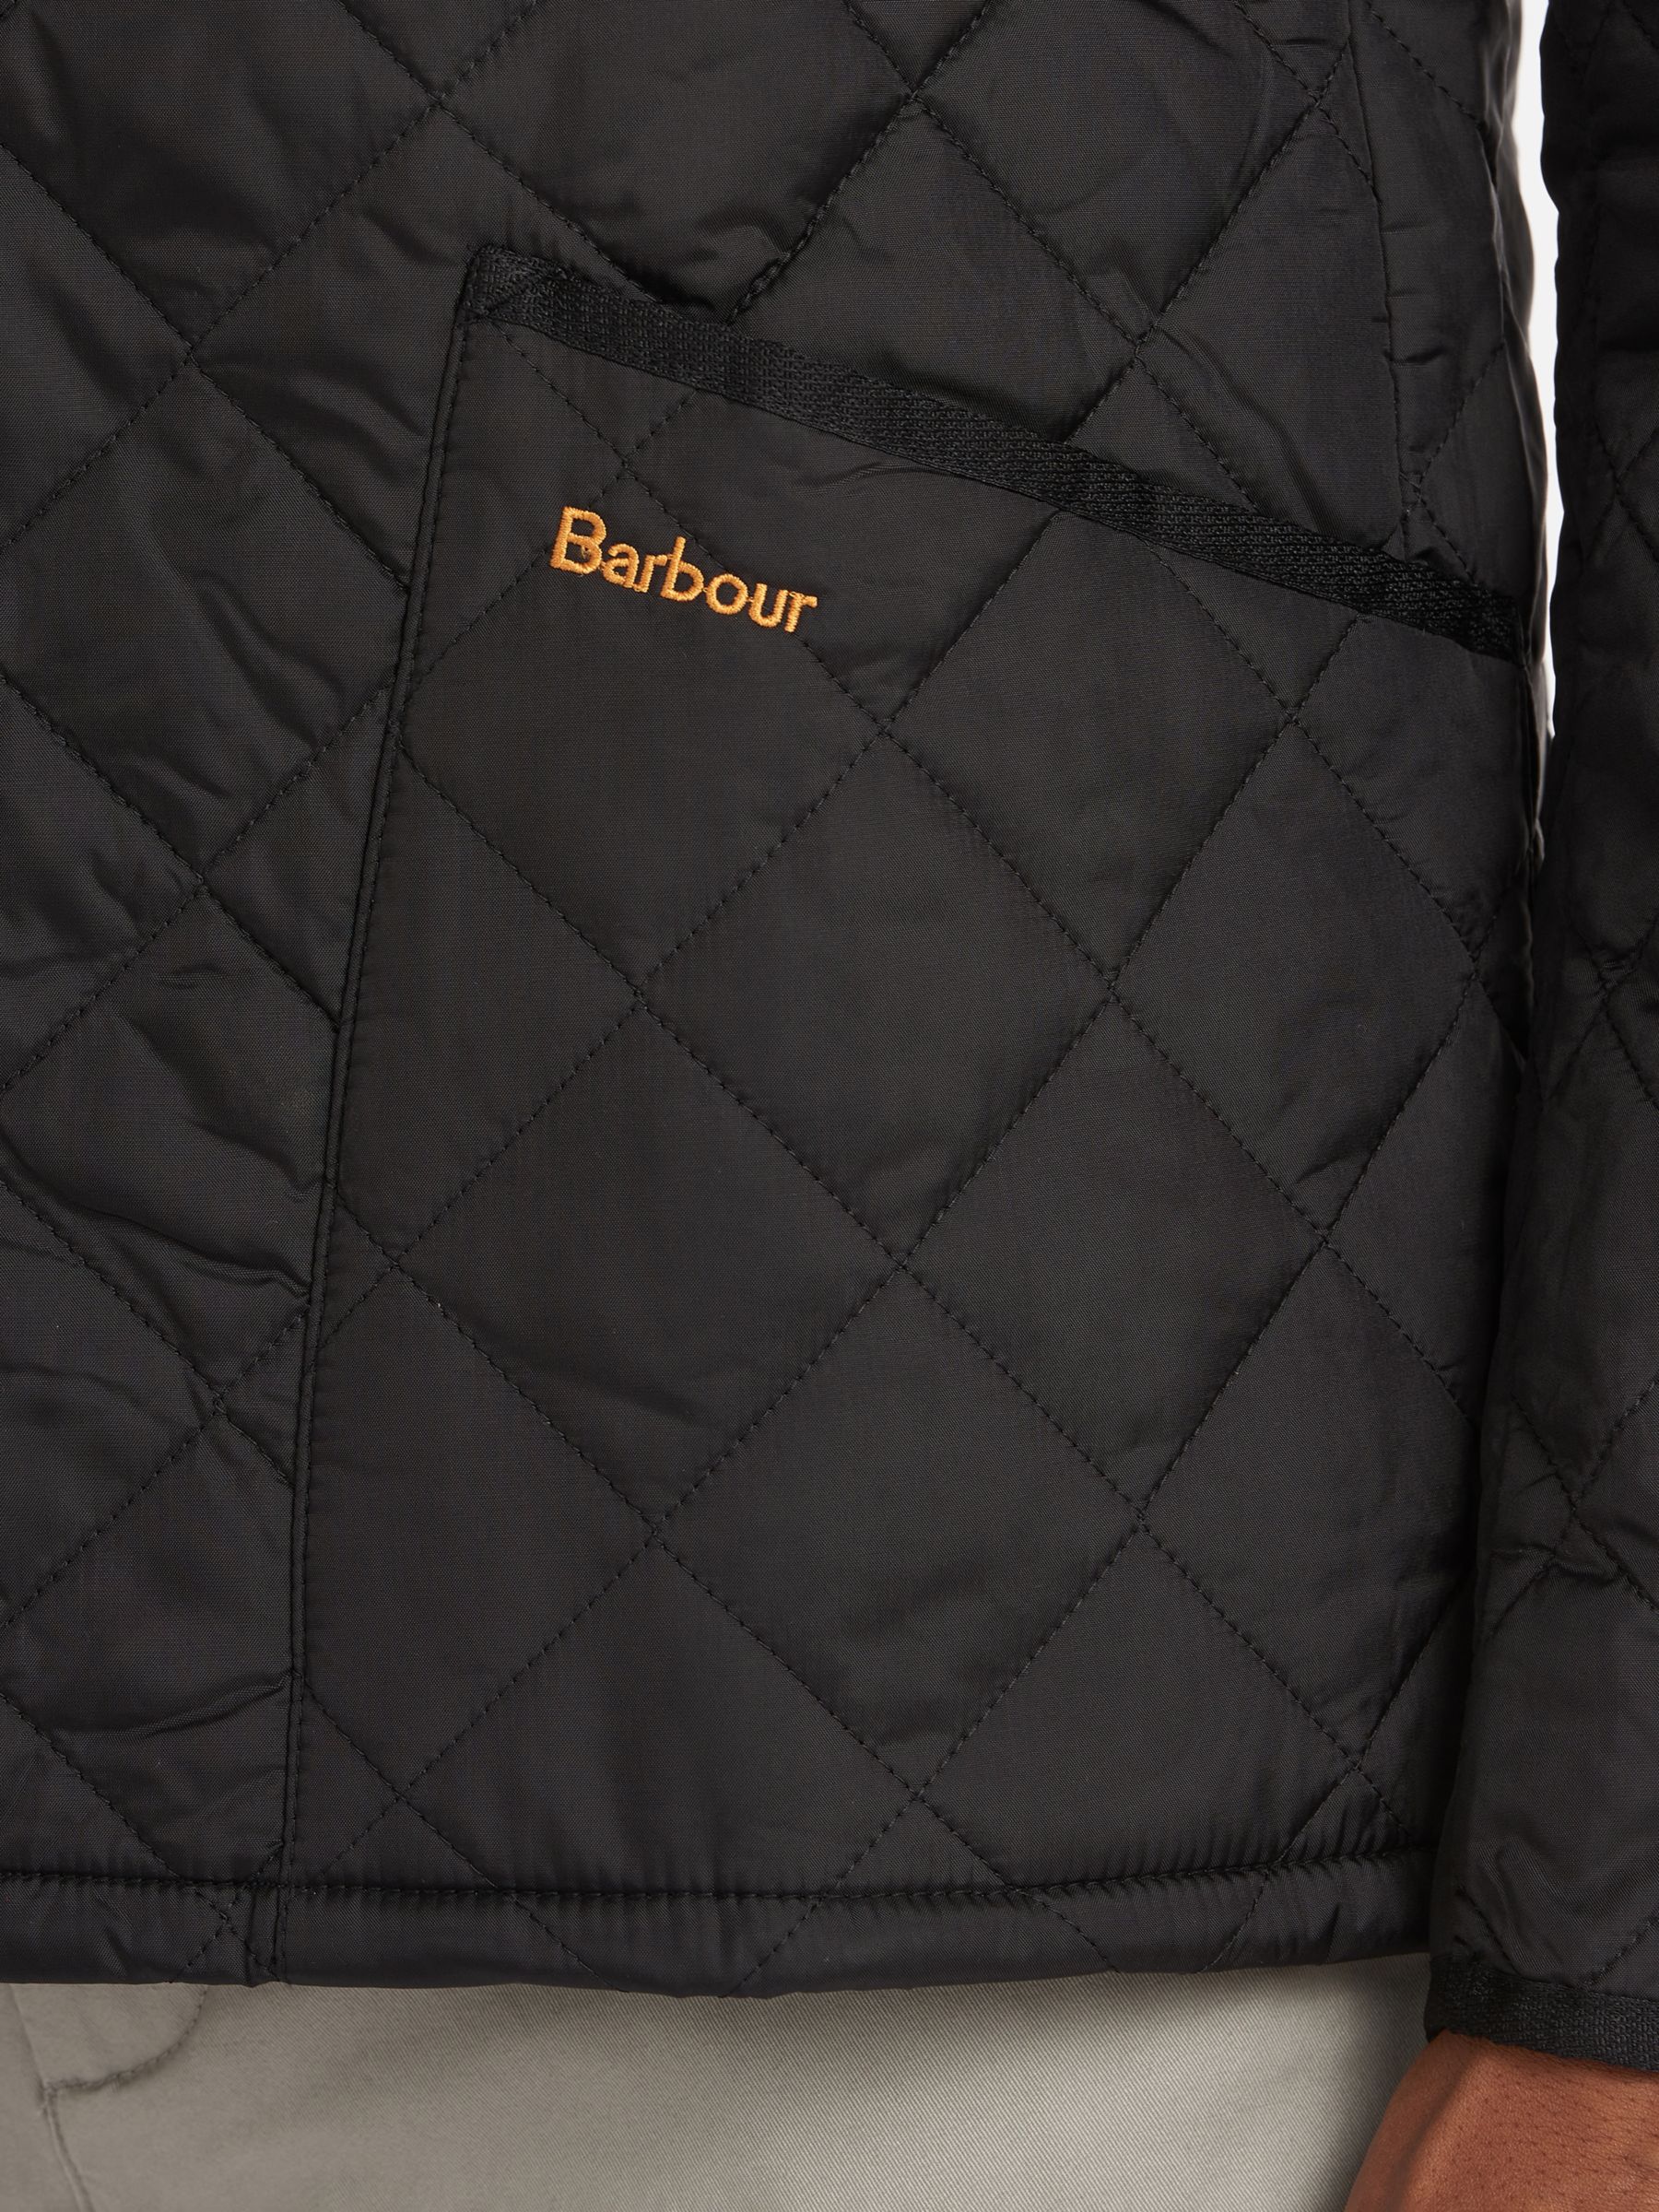 Barbour Heritage Liddesdale Quilted Jacket, Black at John Lewis & Partners